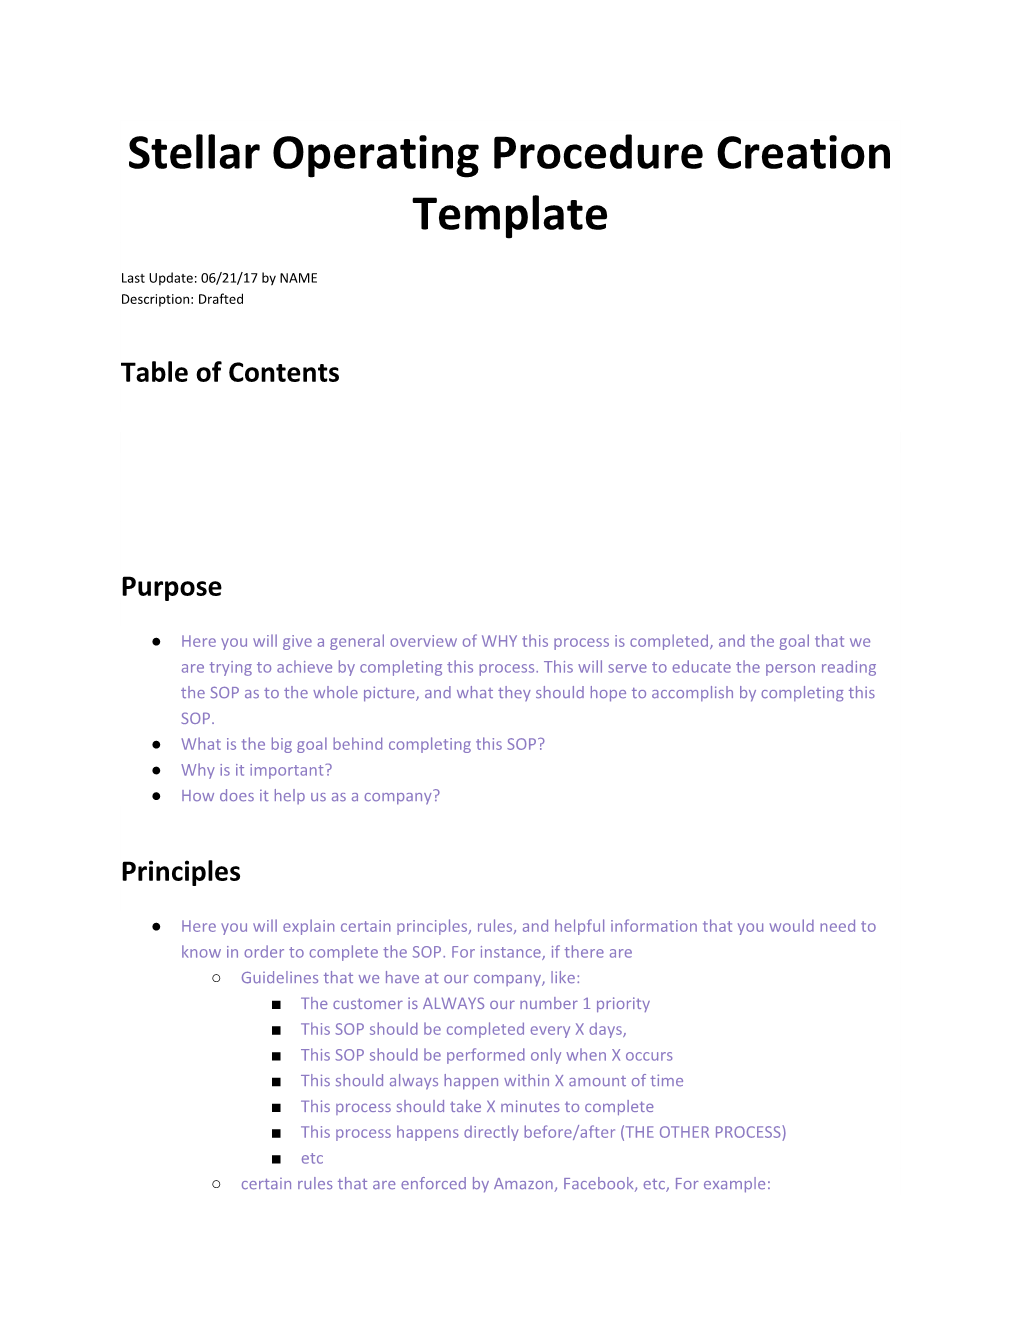 Stellar Operating Procedure Creation Template